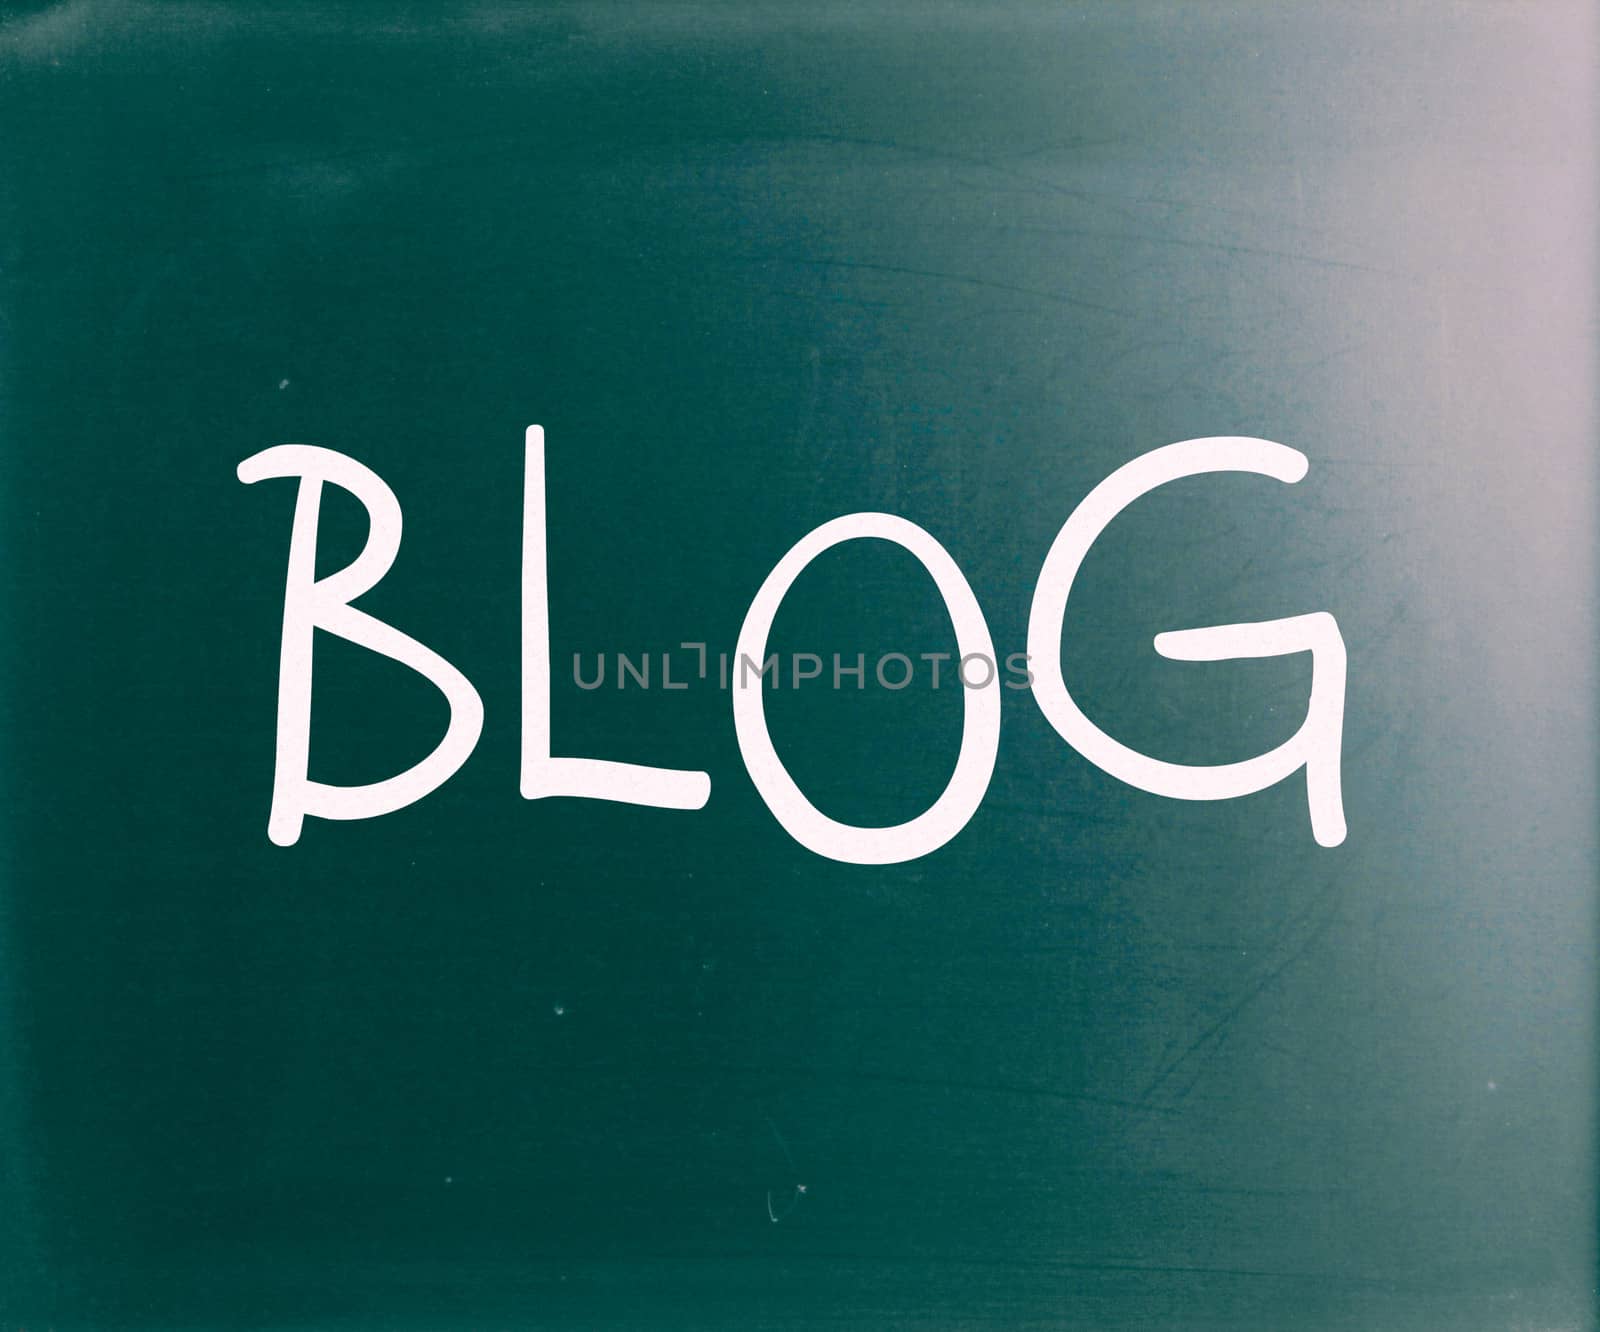 "Blog" handwritten with white chalk on a blackboard